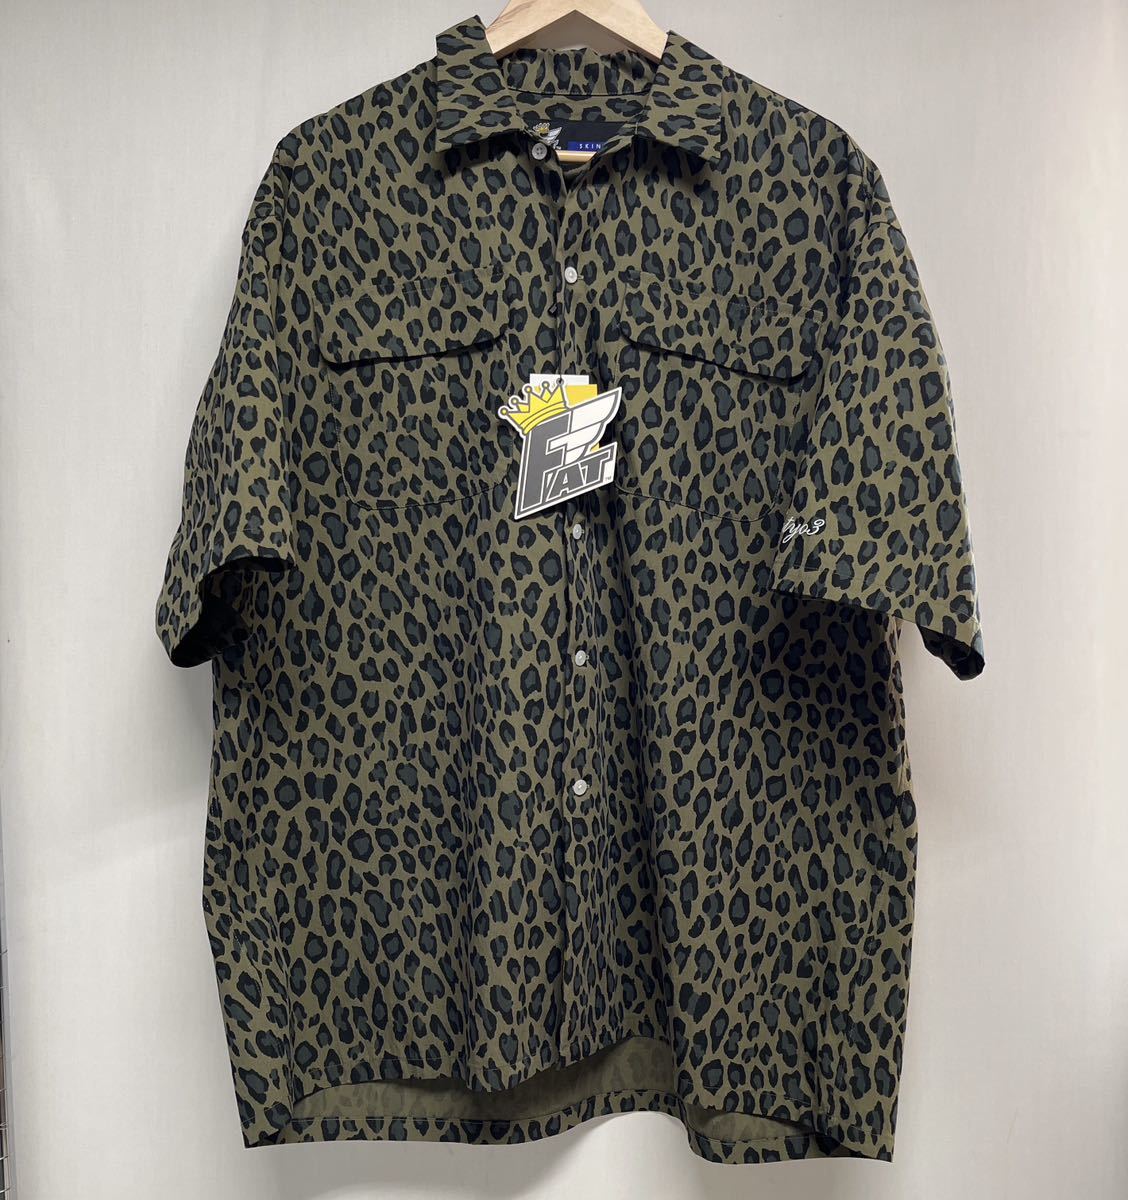 [FATefe- чай ]F32210-SH18-AB PANTHERA рубашка с коротким рукавом SKINNY оливковый Leopard хлопок 2307oki